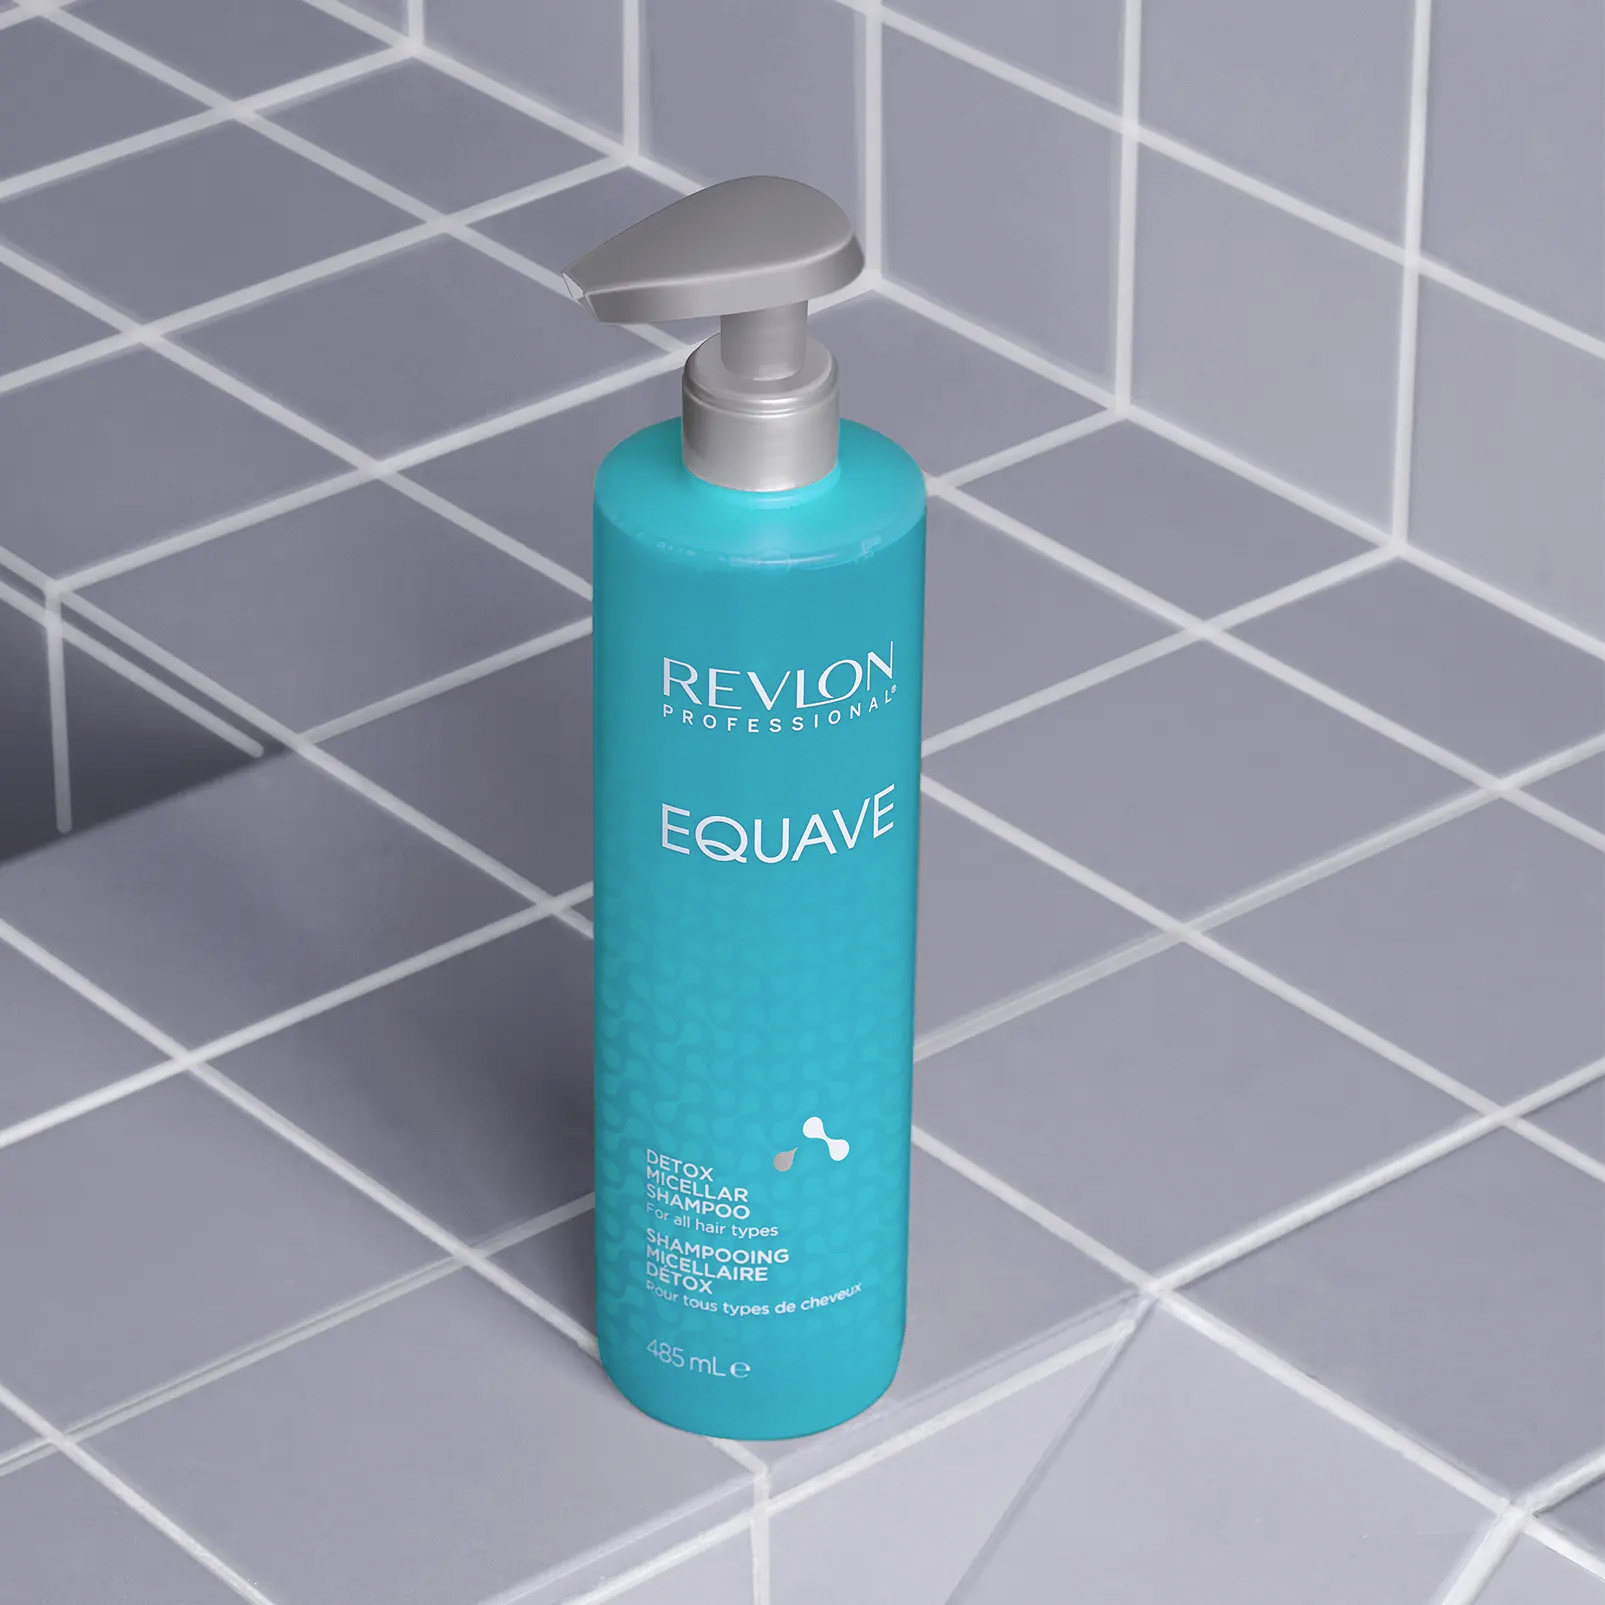 Revlon Professional Equave ™ Detox micellar shampoo - Revlon Professional